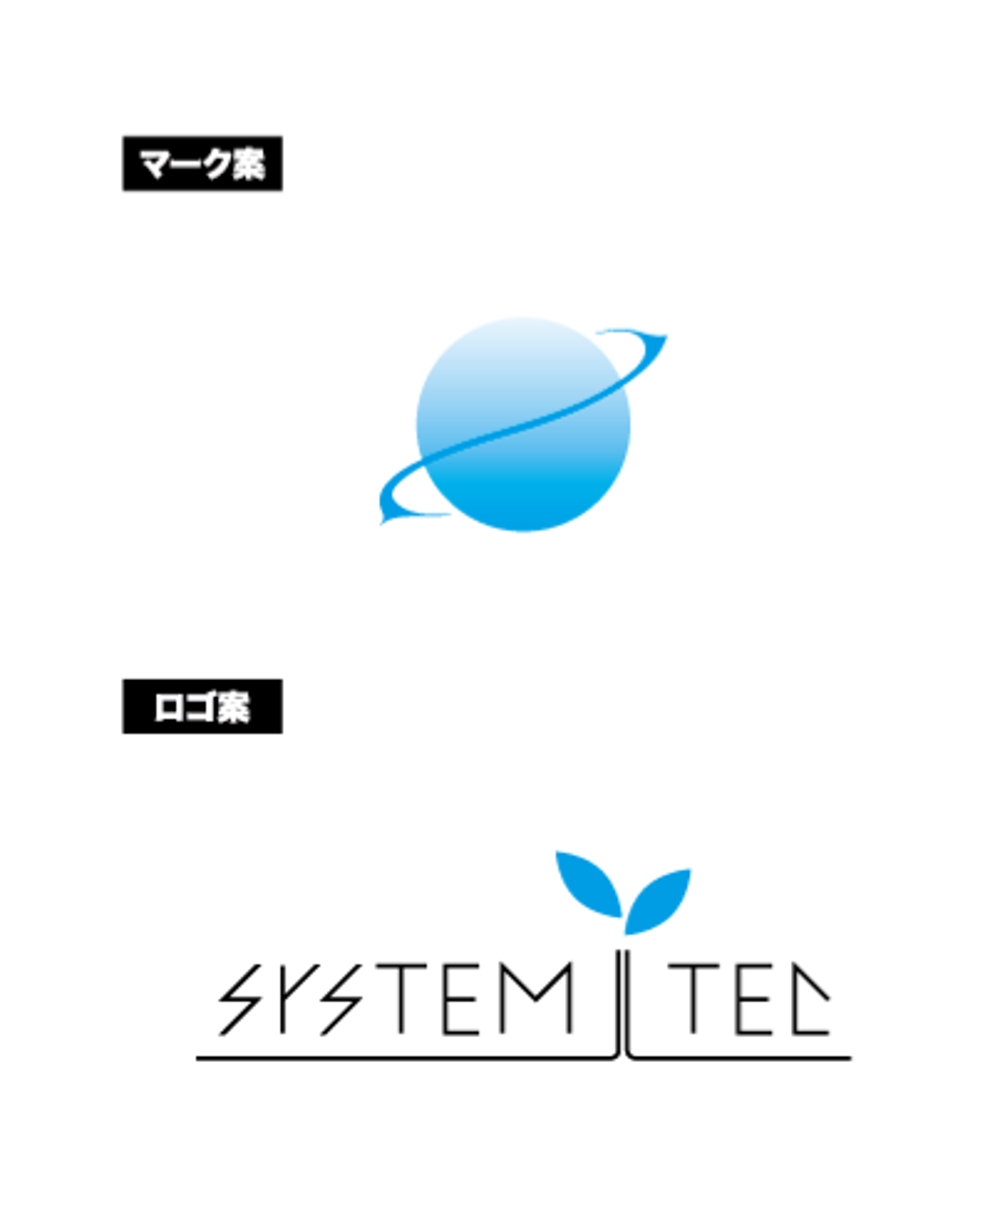 systemtec_logo.png